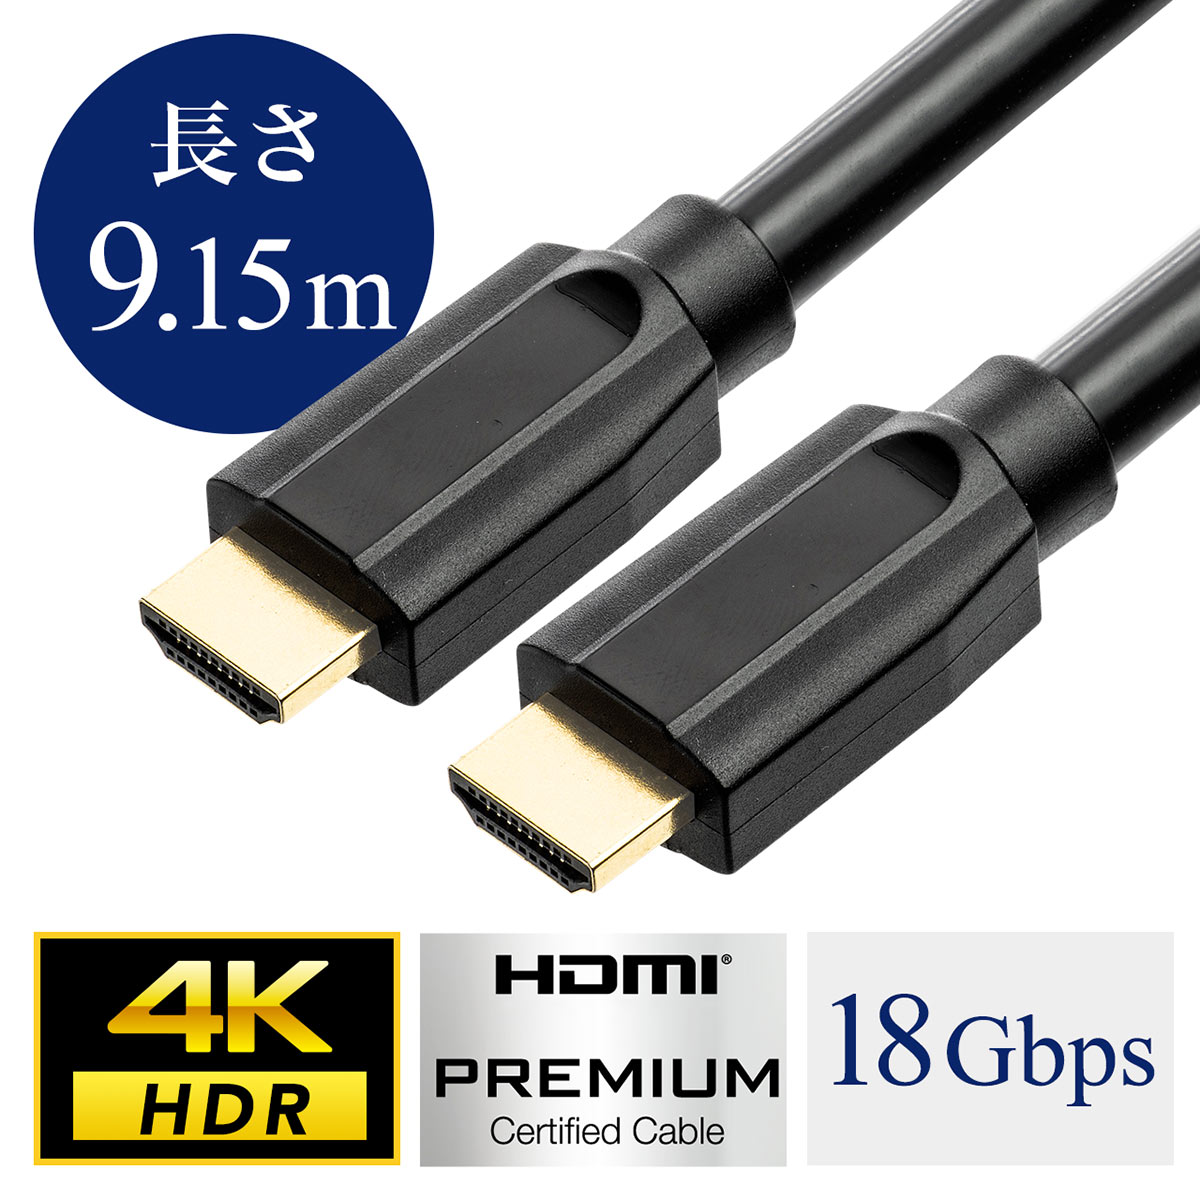 500-HD008-91 サンワダイレクト限定品 送料無料 4K対応HDMIケーブル 9.15m プレミアムHDMIケーブル 直営ストア 60p HDMI認証取得品 海外限定 Premium 4K HDR対応 18Gbps